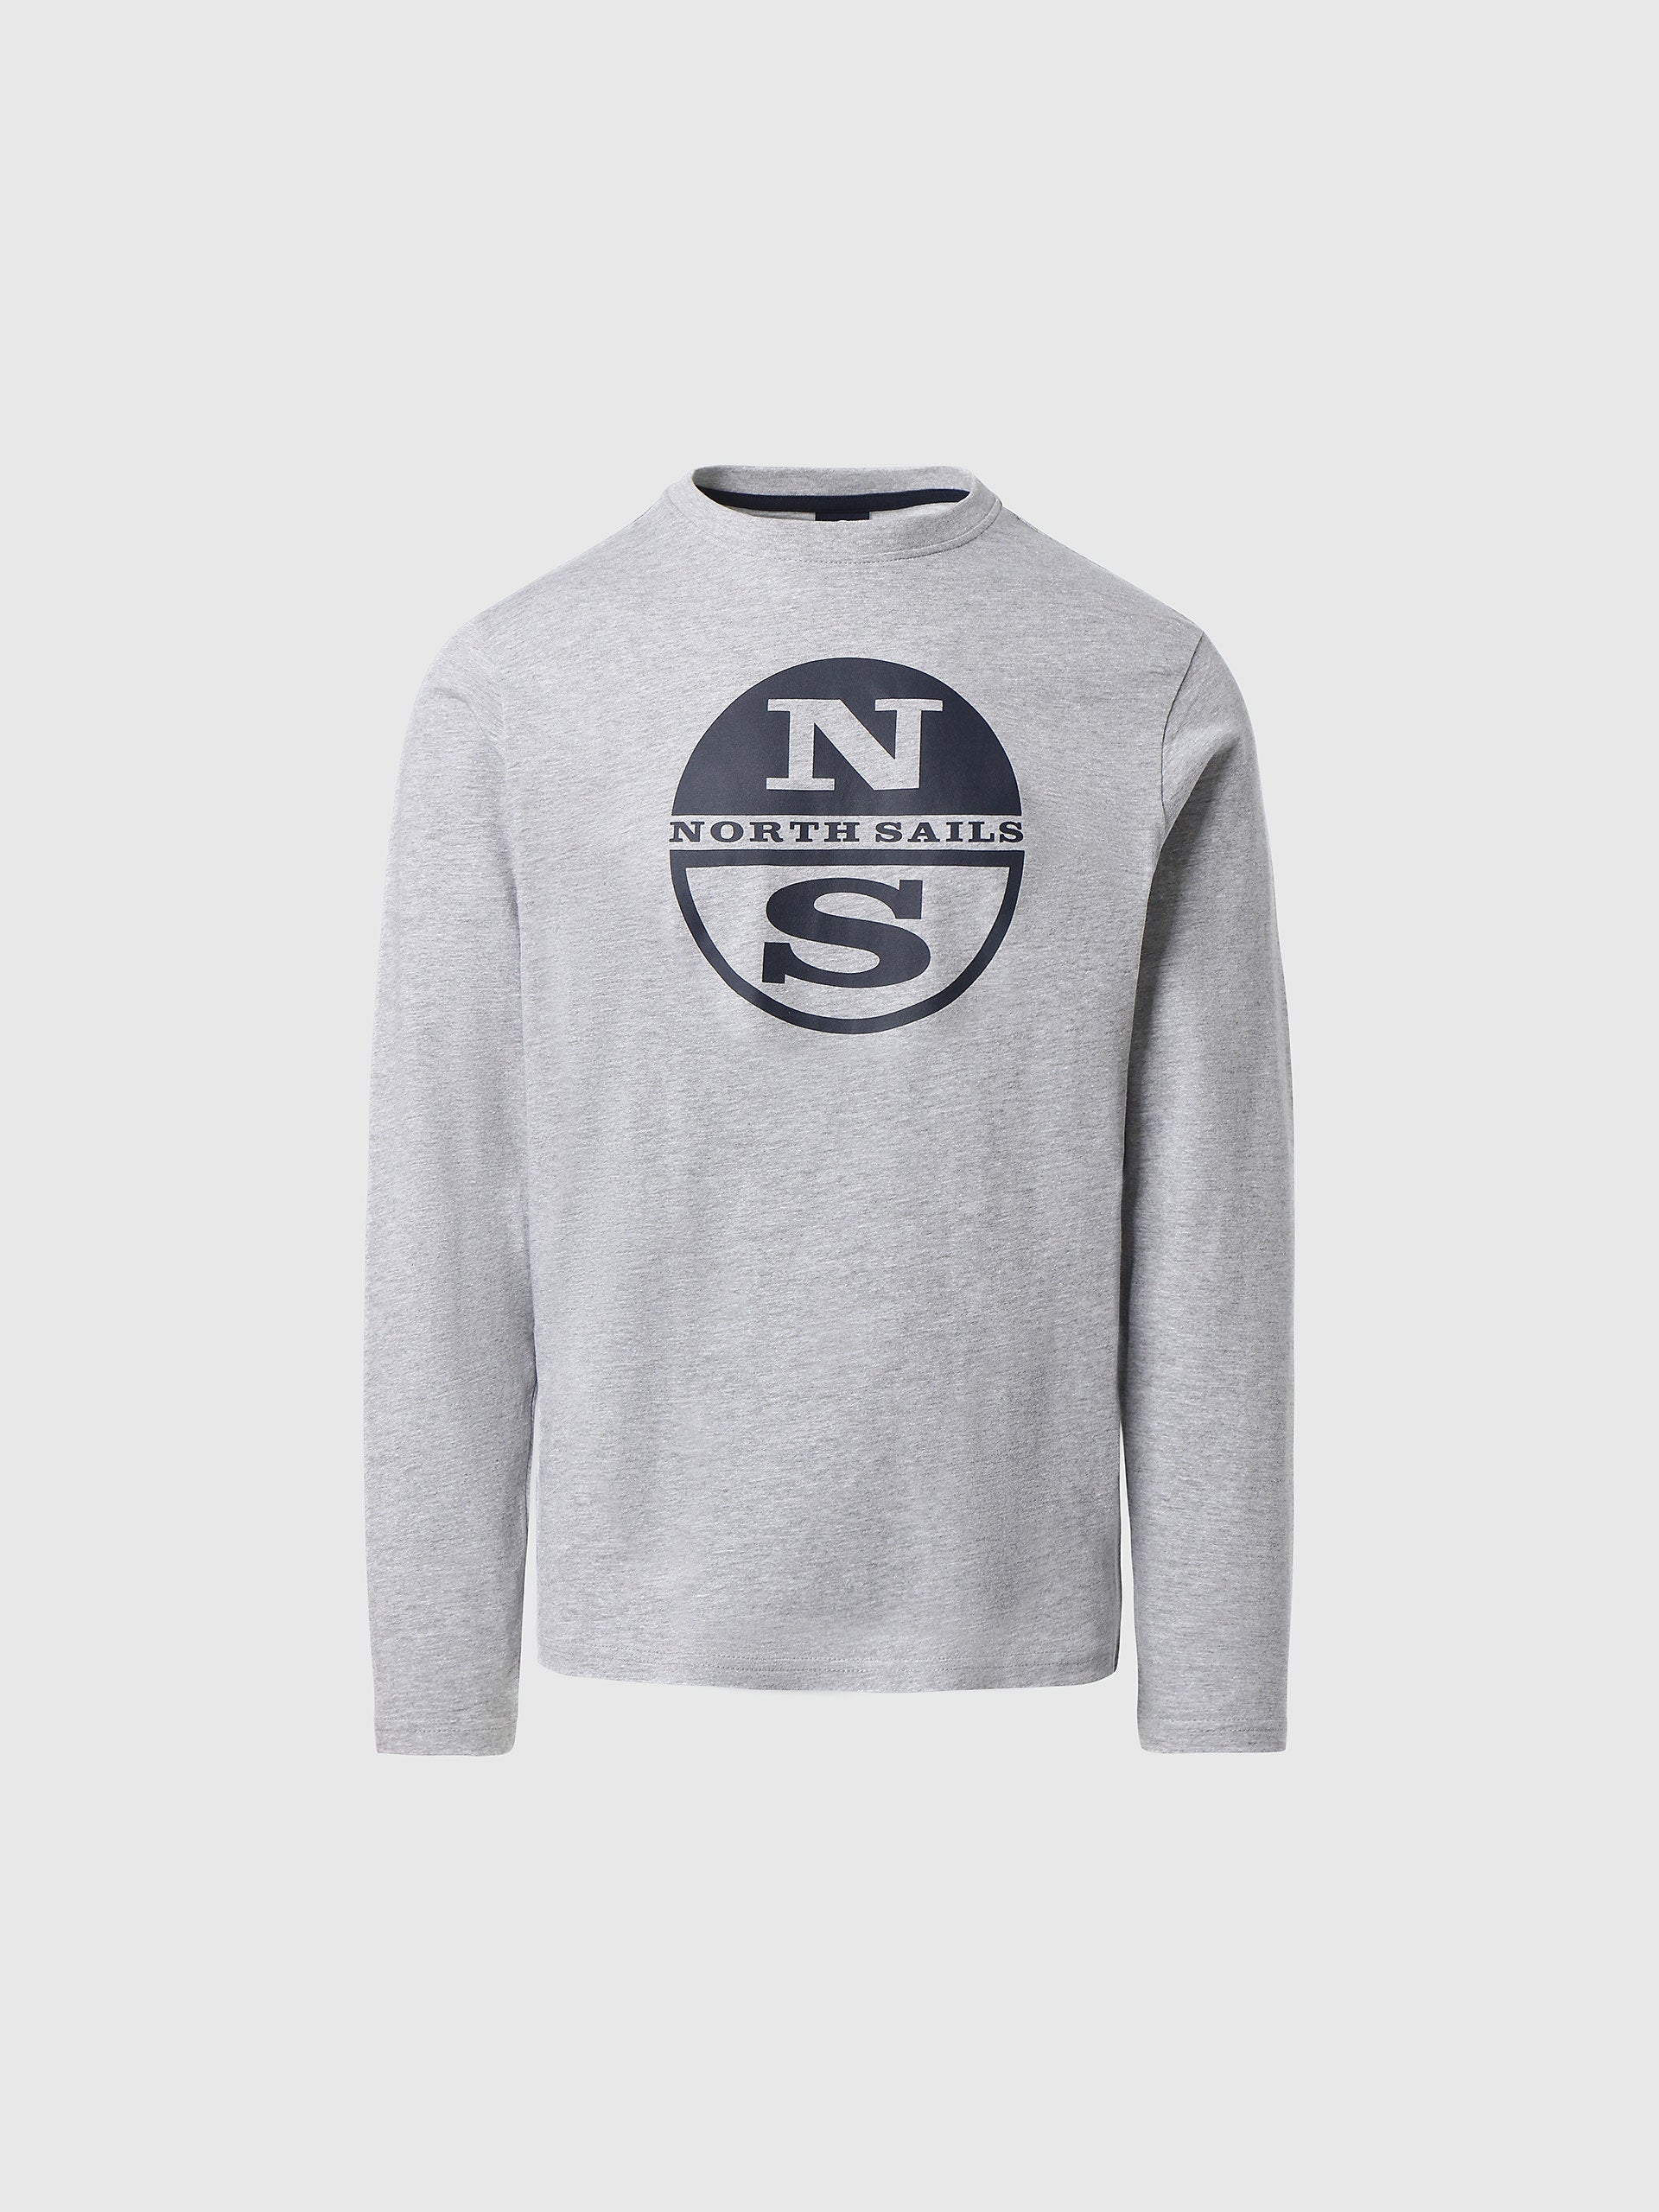 North Sails - Organic jersey T-shirtNorth SailsMedium grey melangeS